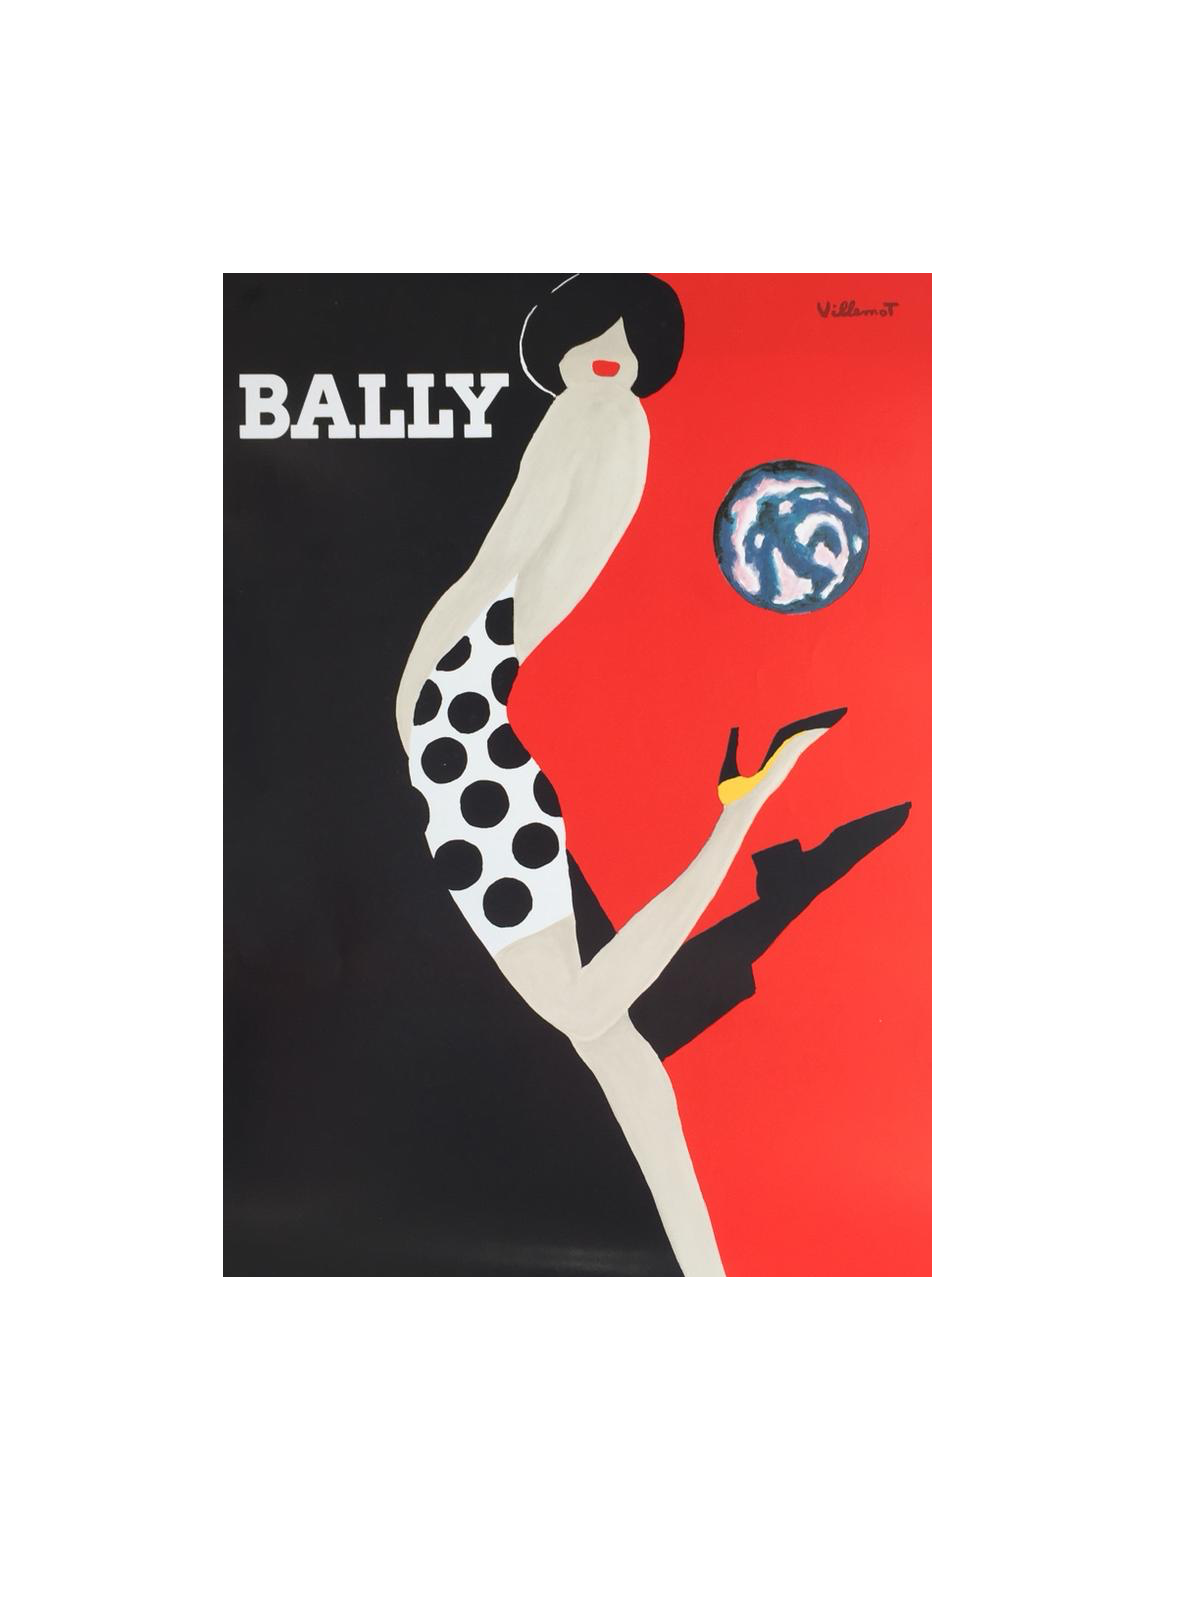 Bally Kick by Bernard Villemot